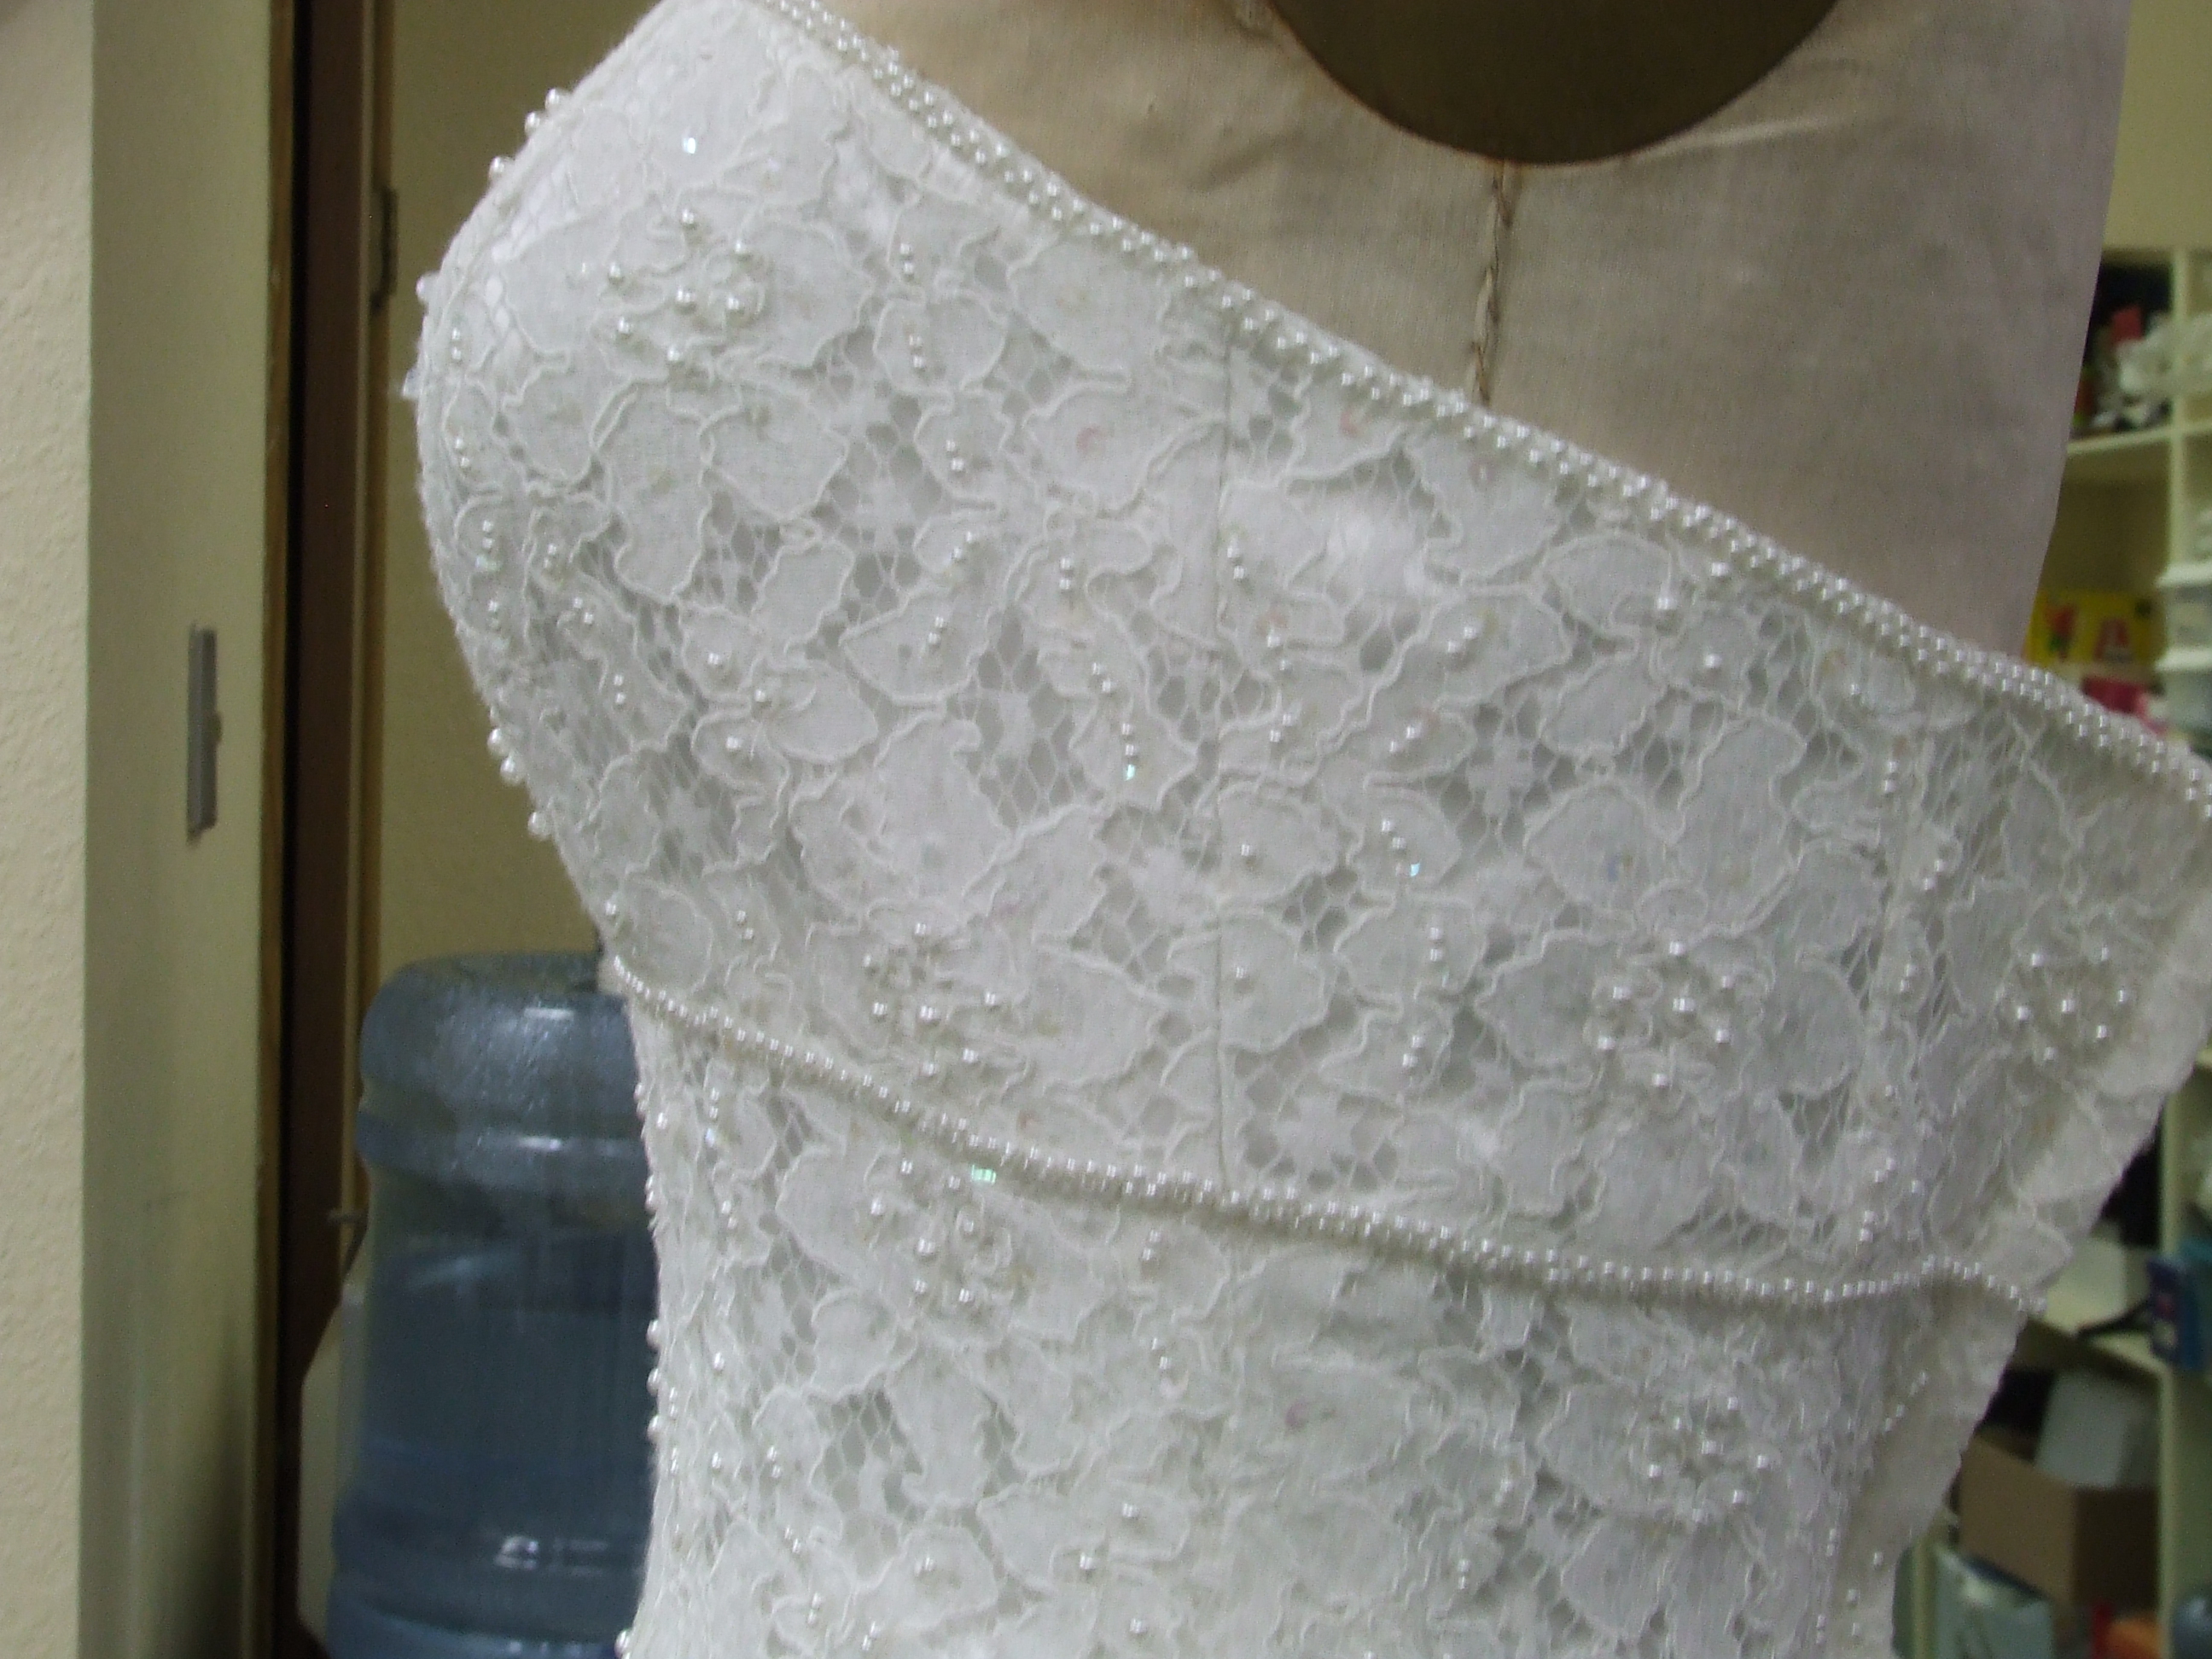 Sew bead wedding dress